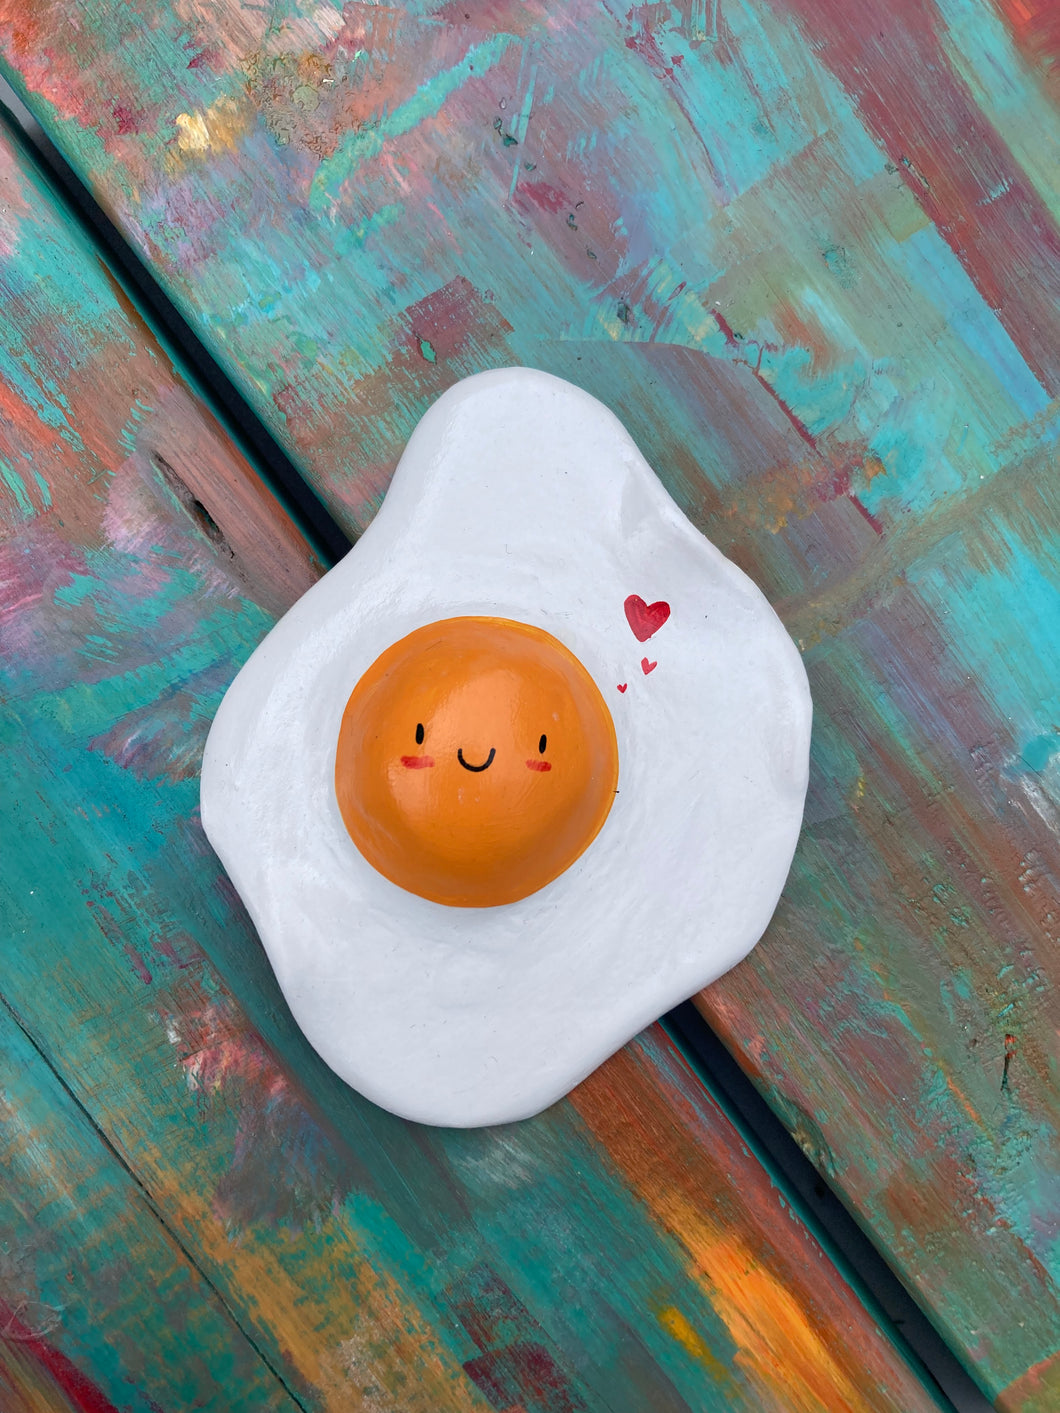 Small Smiley Egg!